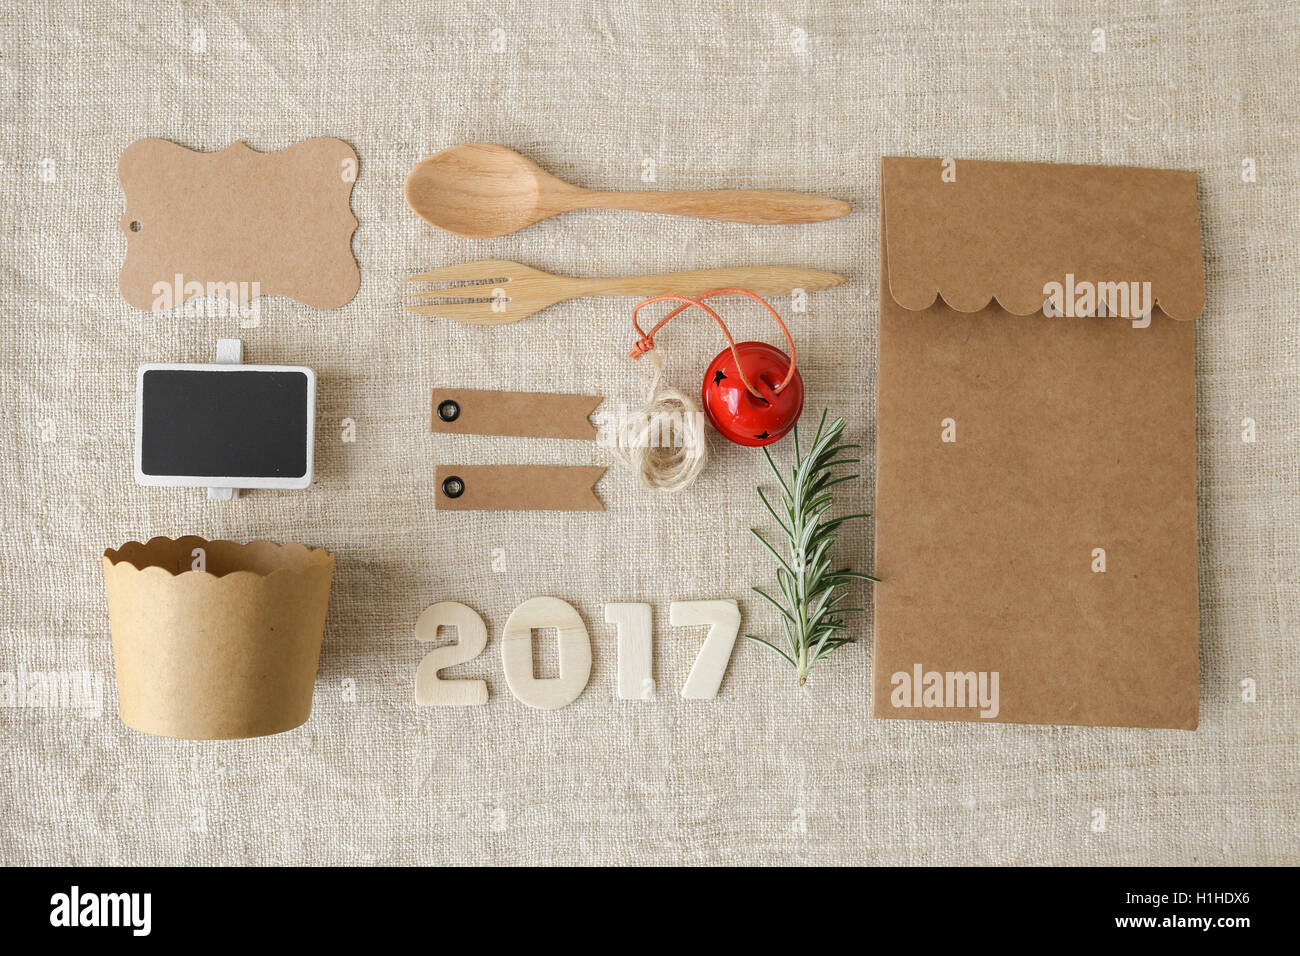 2017 Happy New Year and Christmas holidays identity branding mock up set Stock Photo